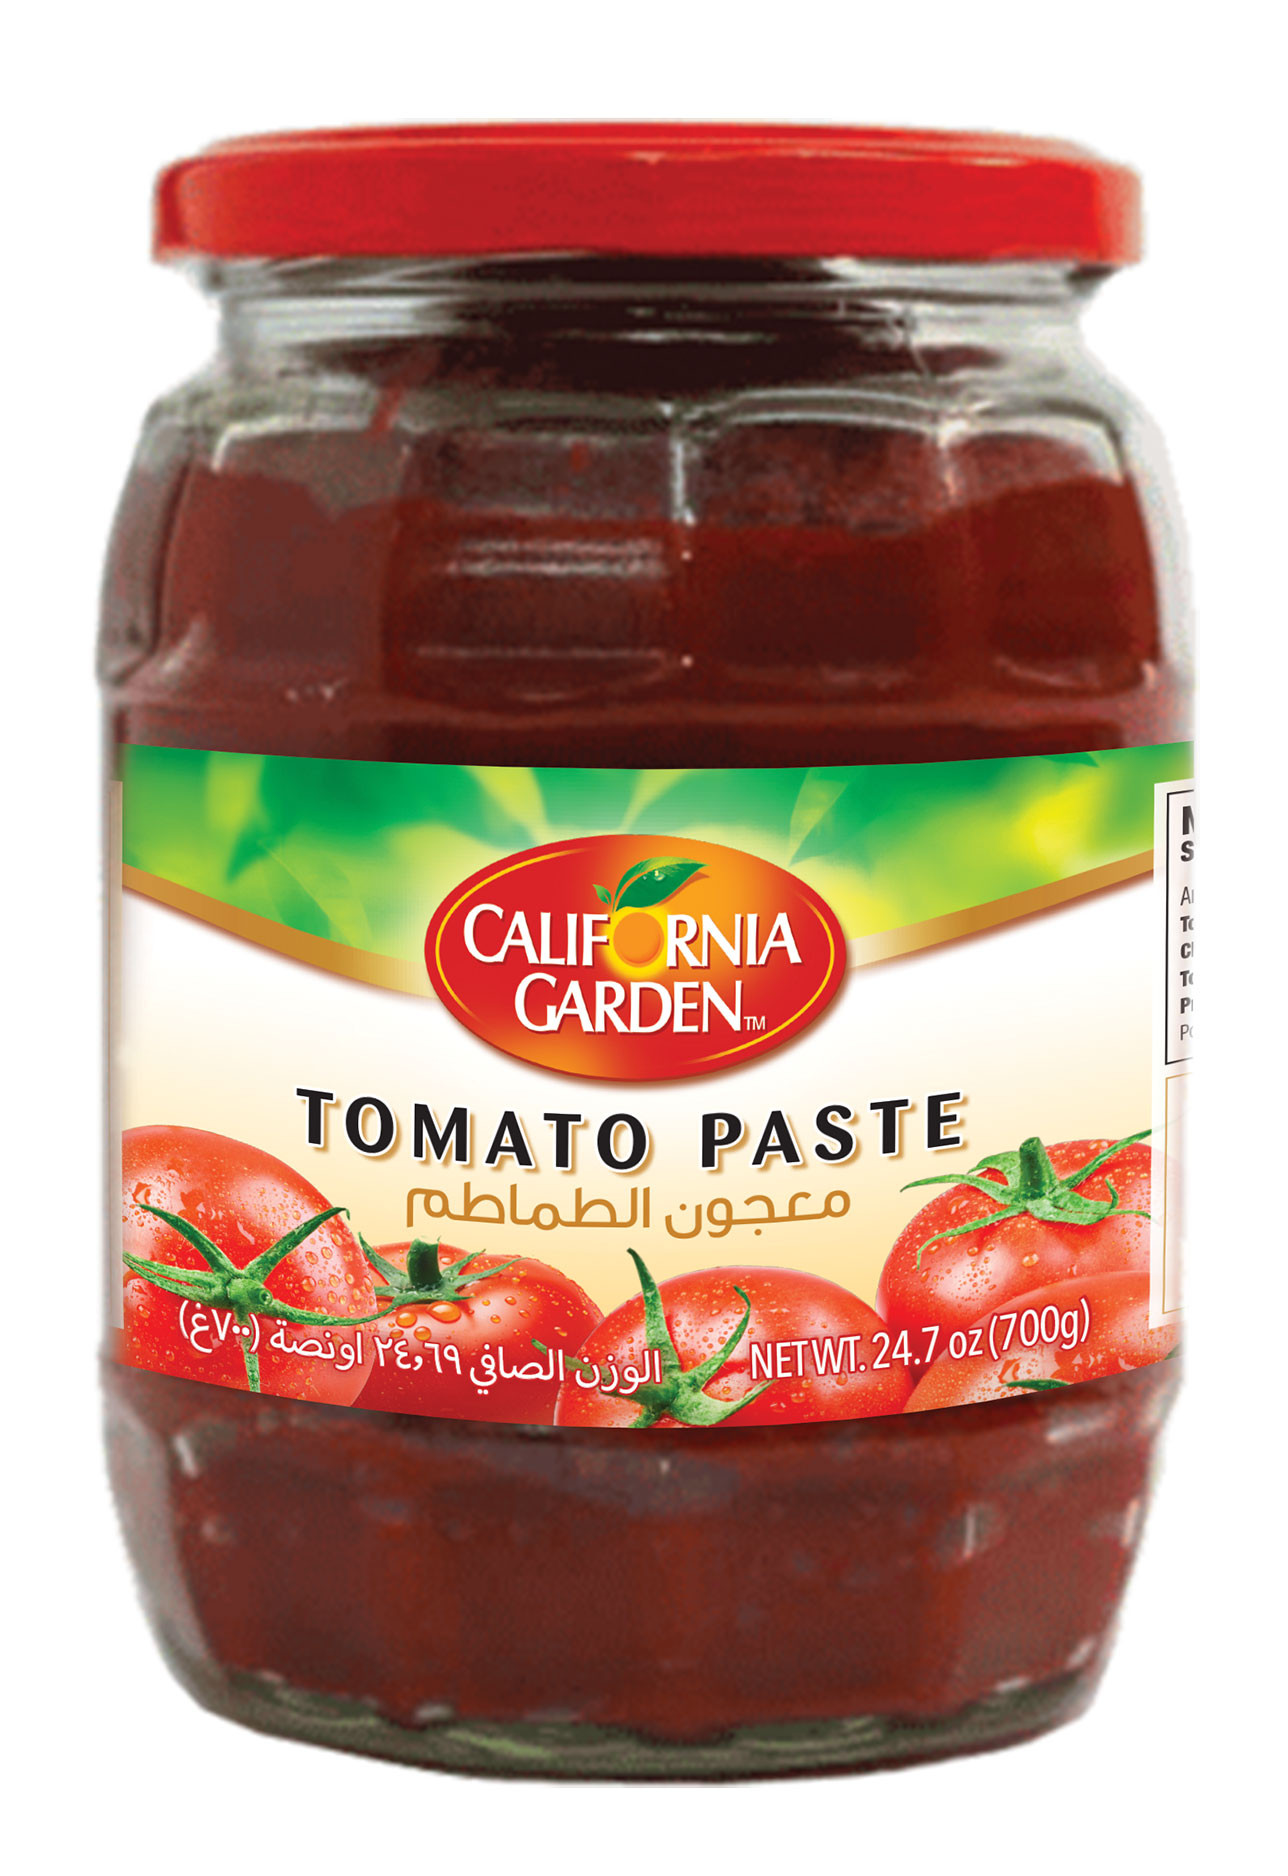 Tomato Sauce From Paste
 Tomato Paste in Jars – California Garden